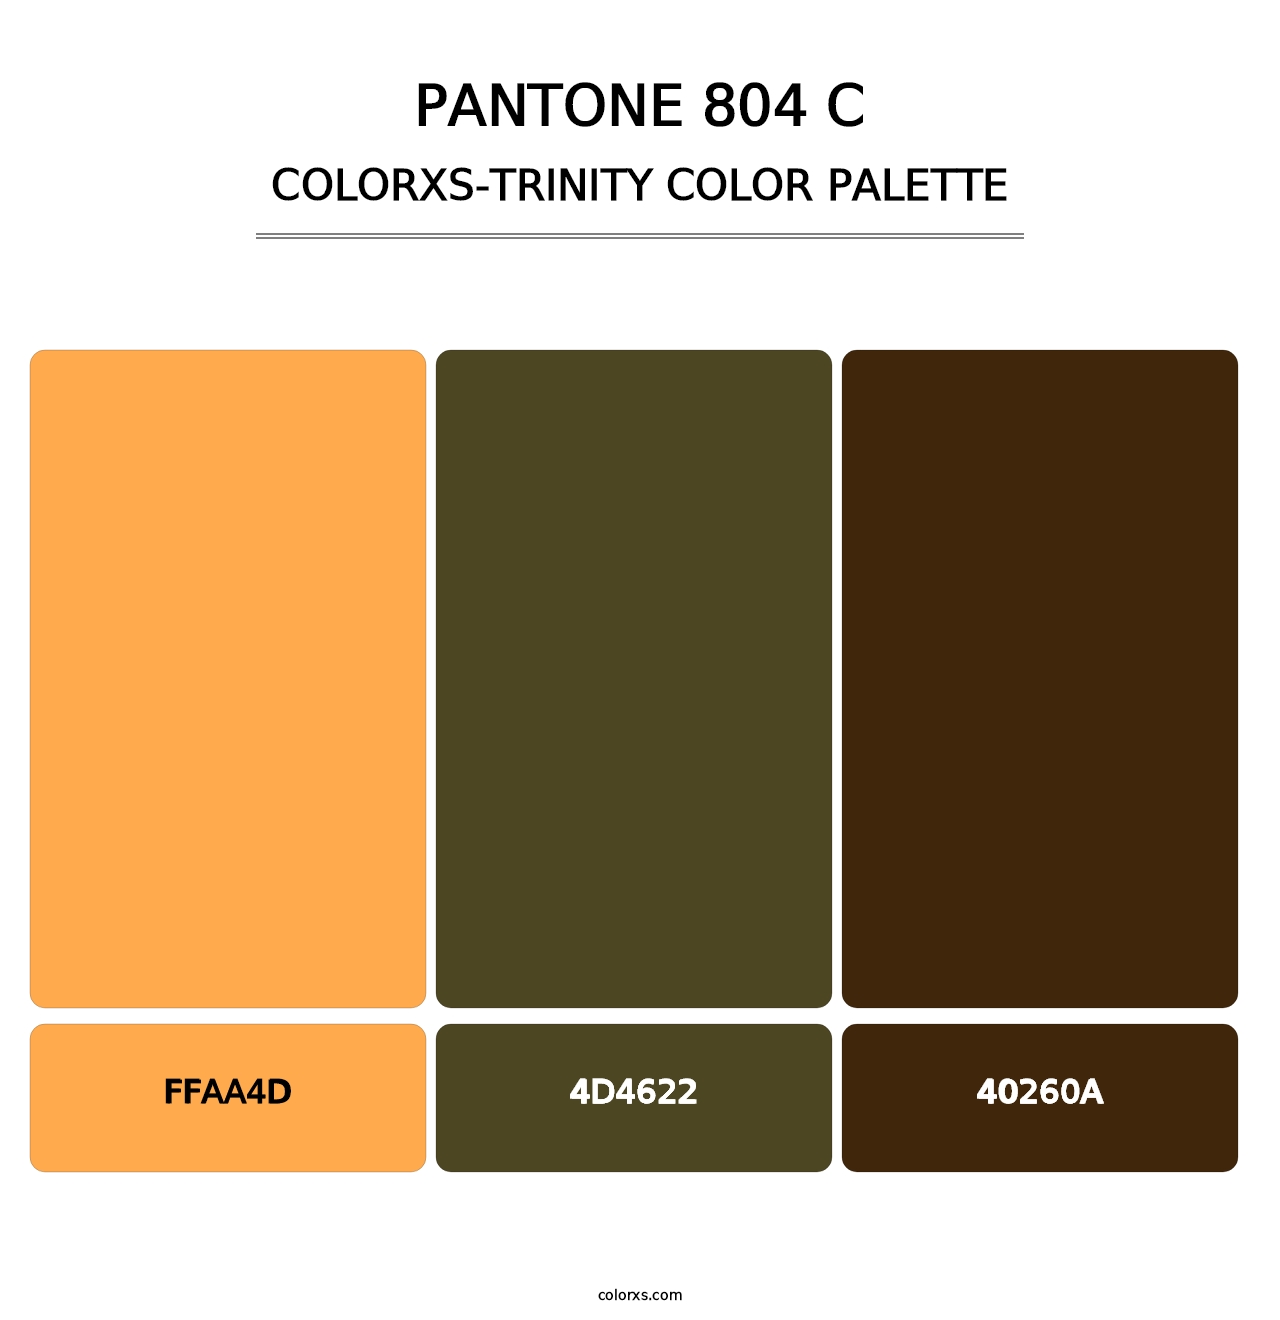 PANTONE 804 C - Colorxs Trinity Palette